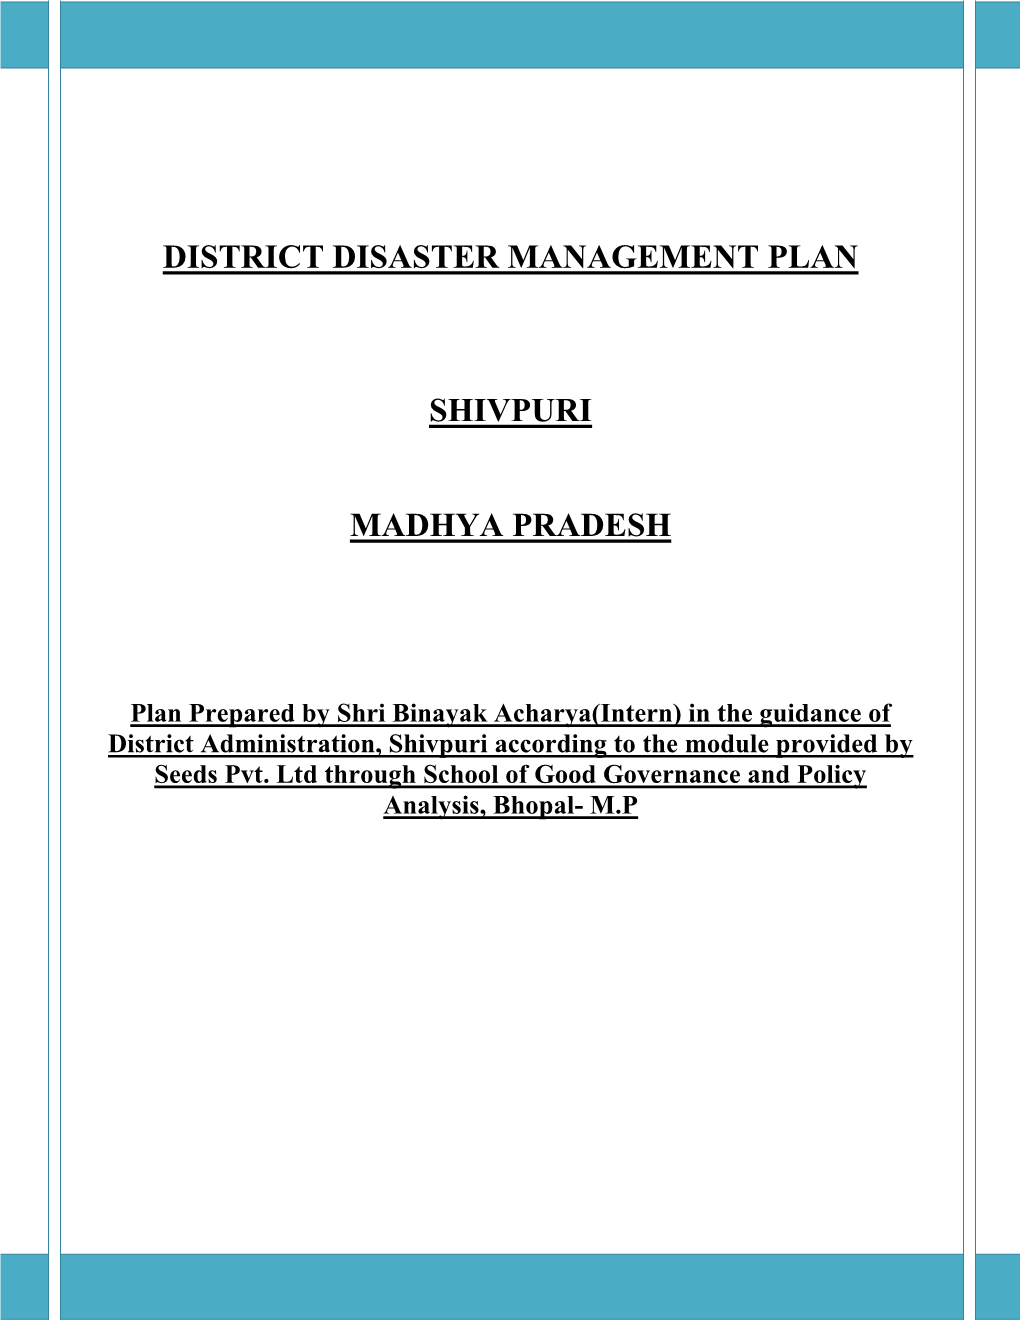 District Disaster Management Plan Shivpuri Madhya